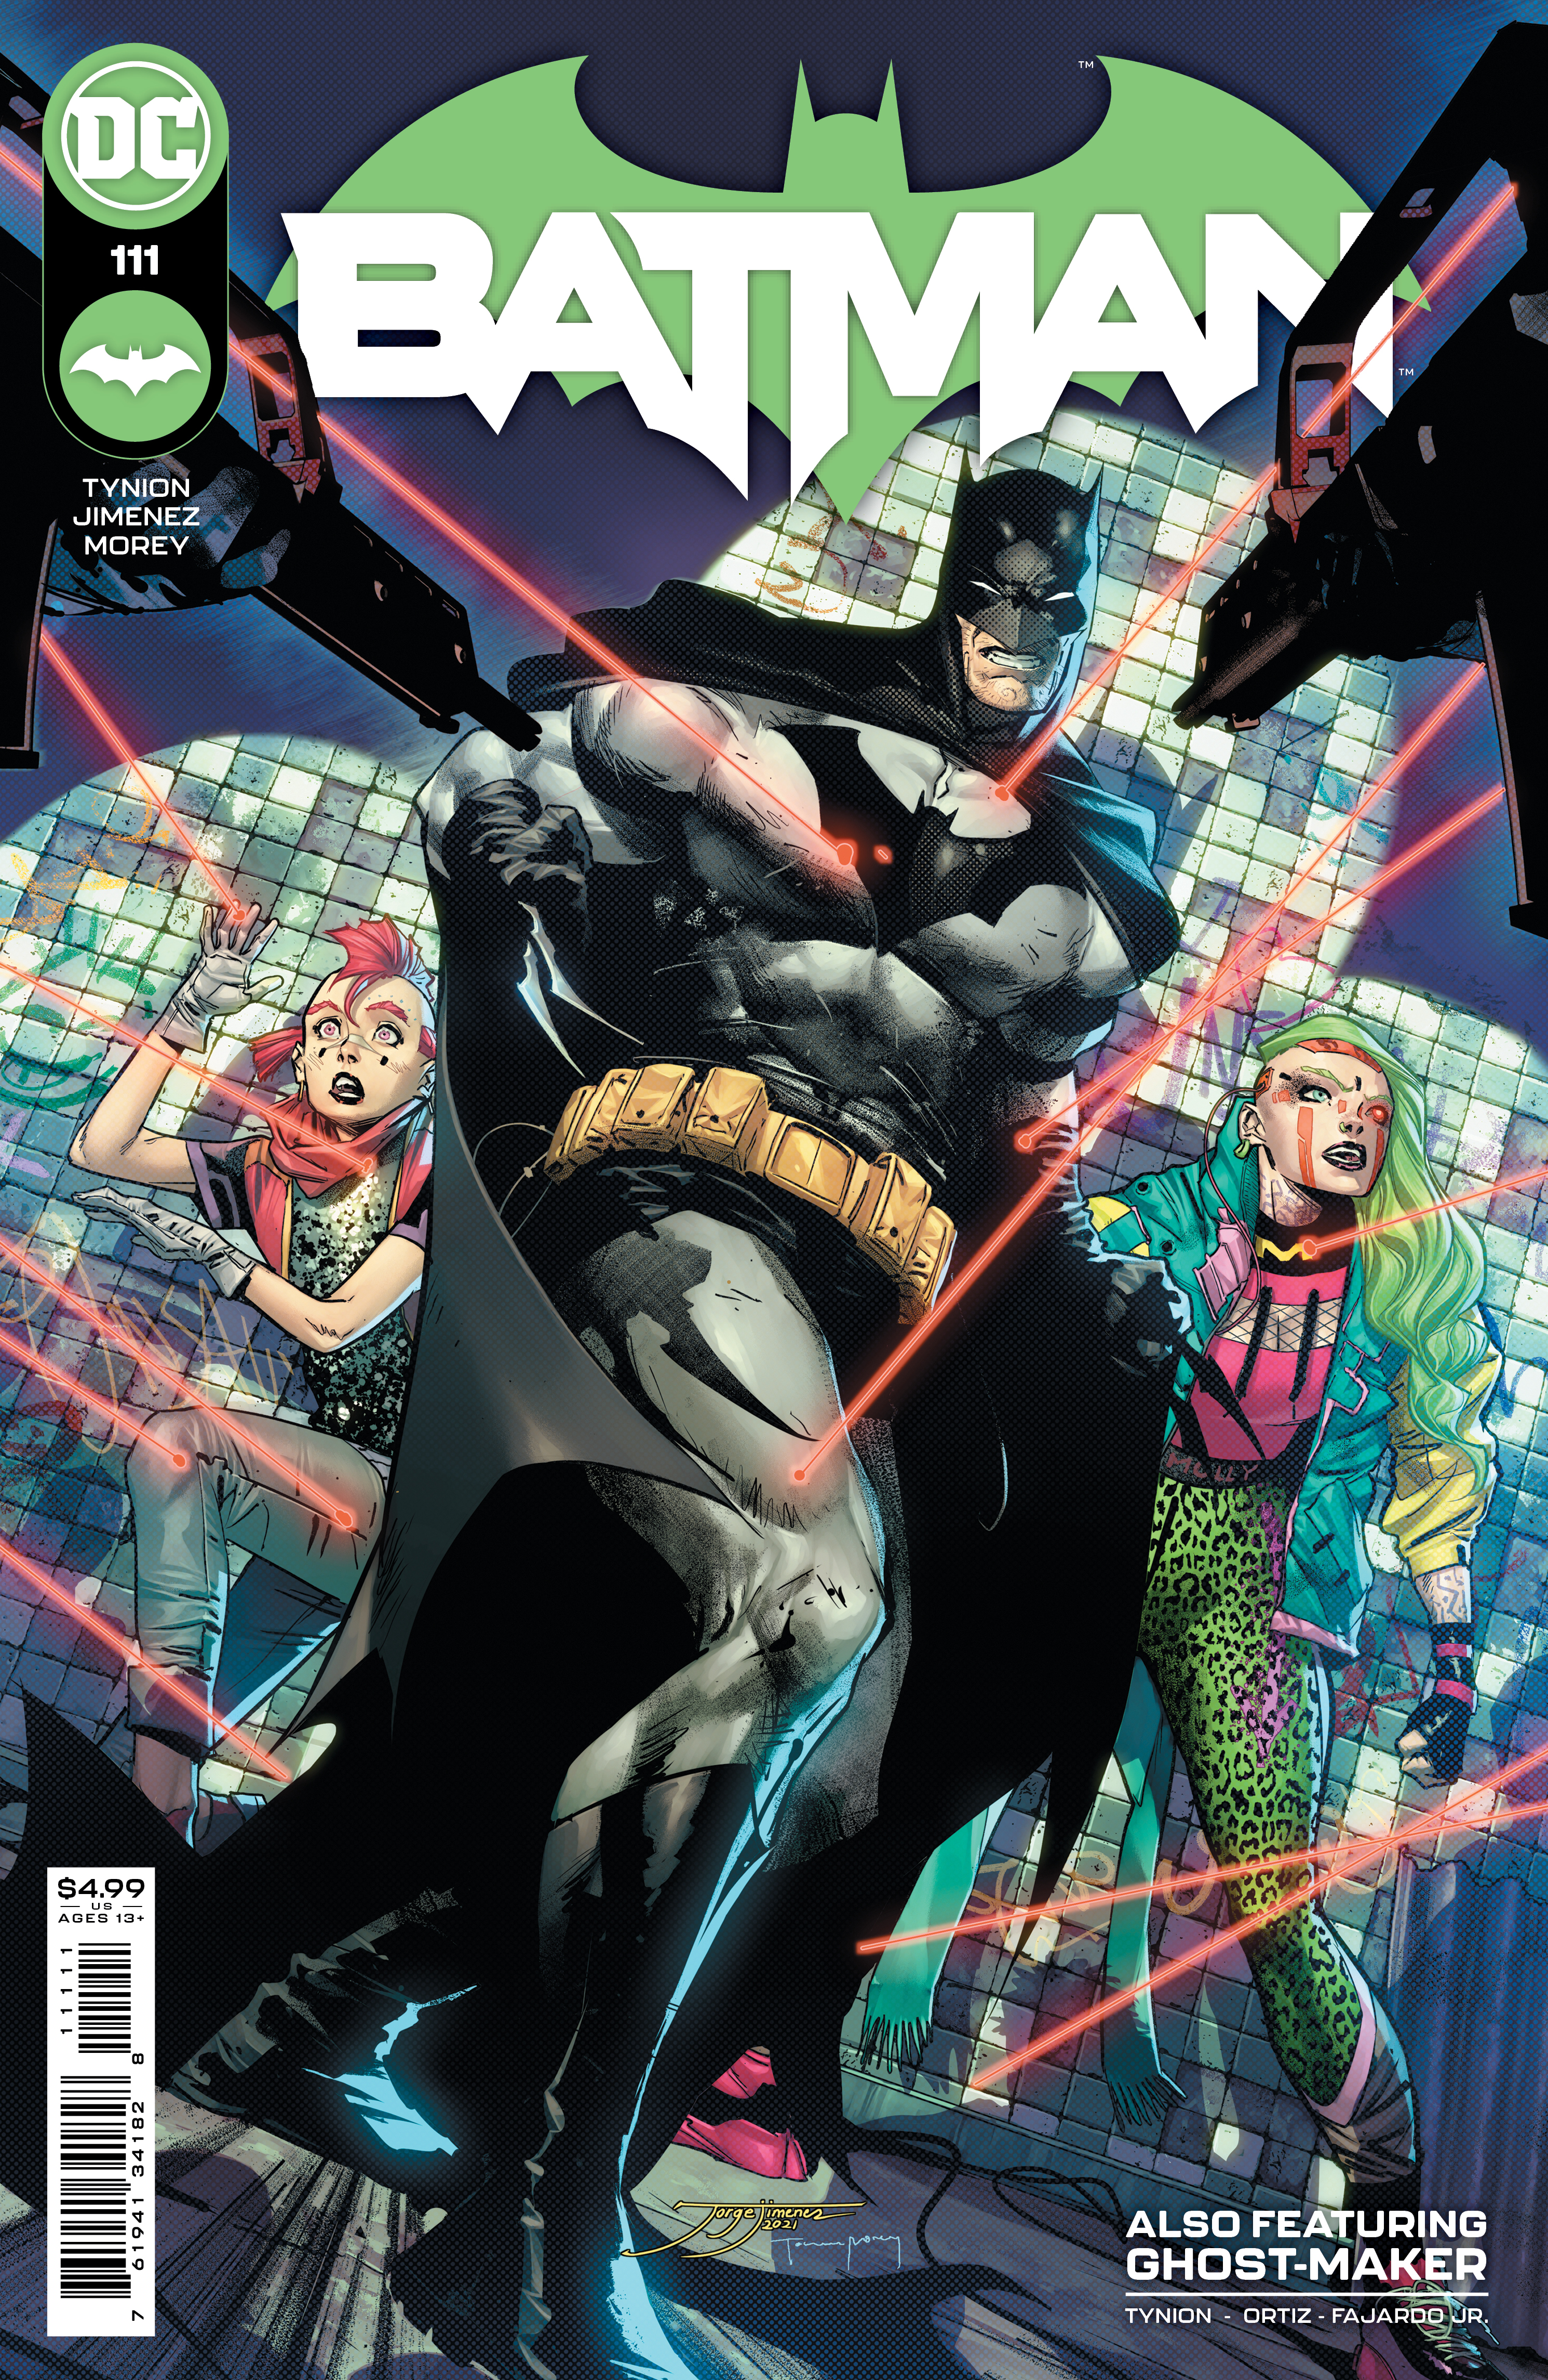 Batman #111 Cover A Jorge Jimenez (2016)